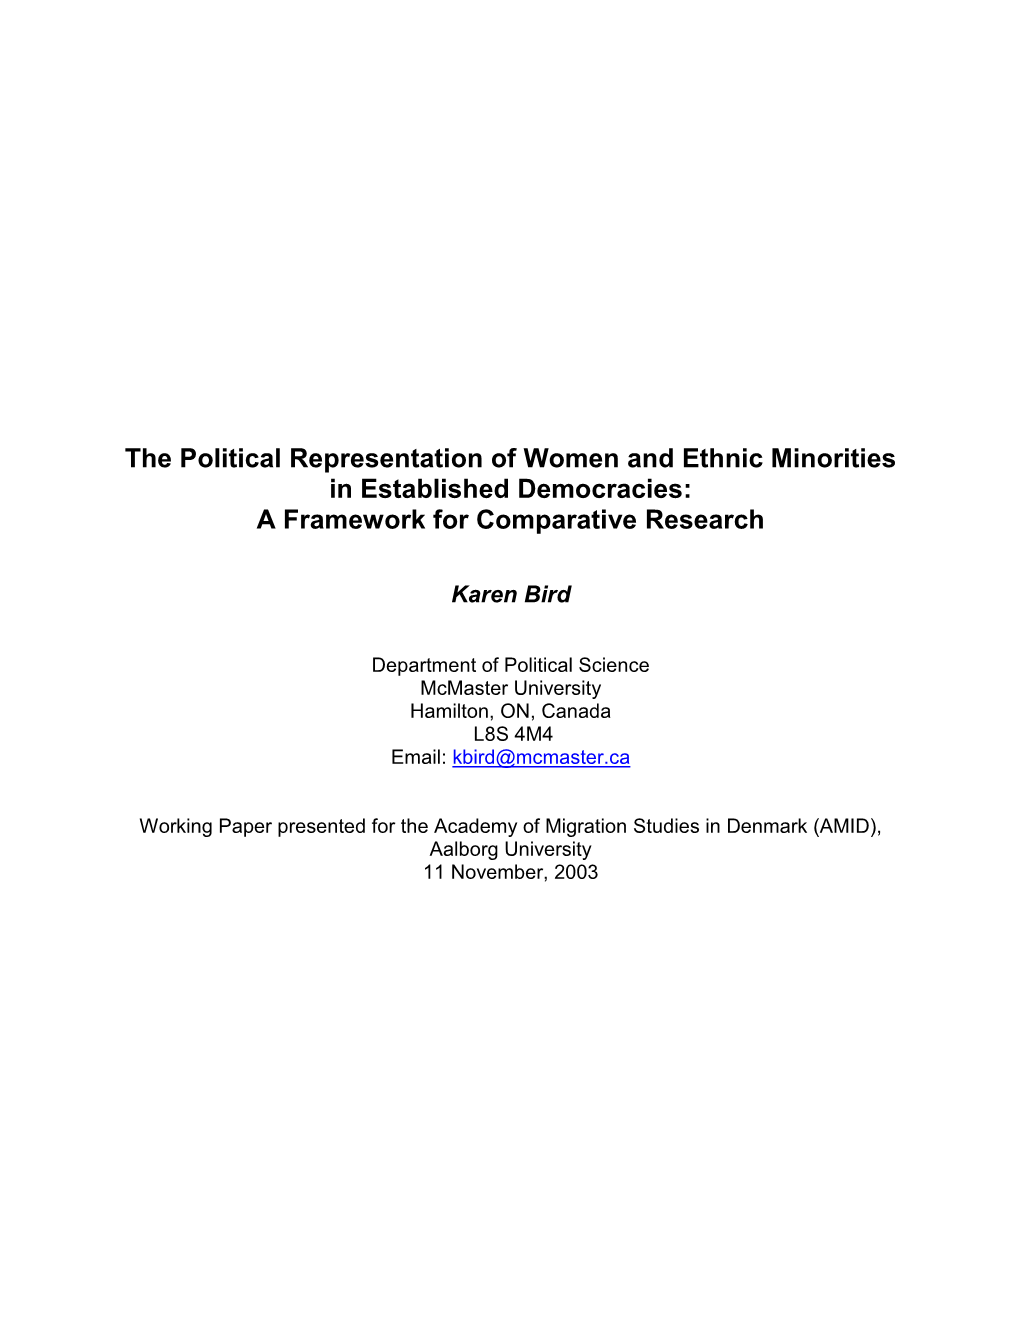 Political Representation of Women and Minorities